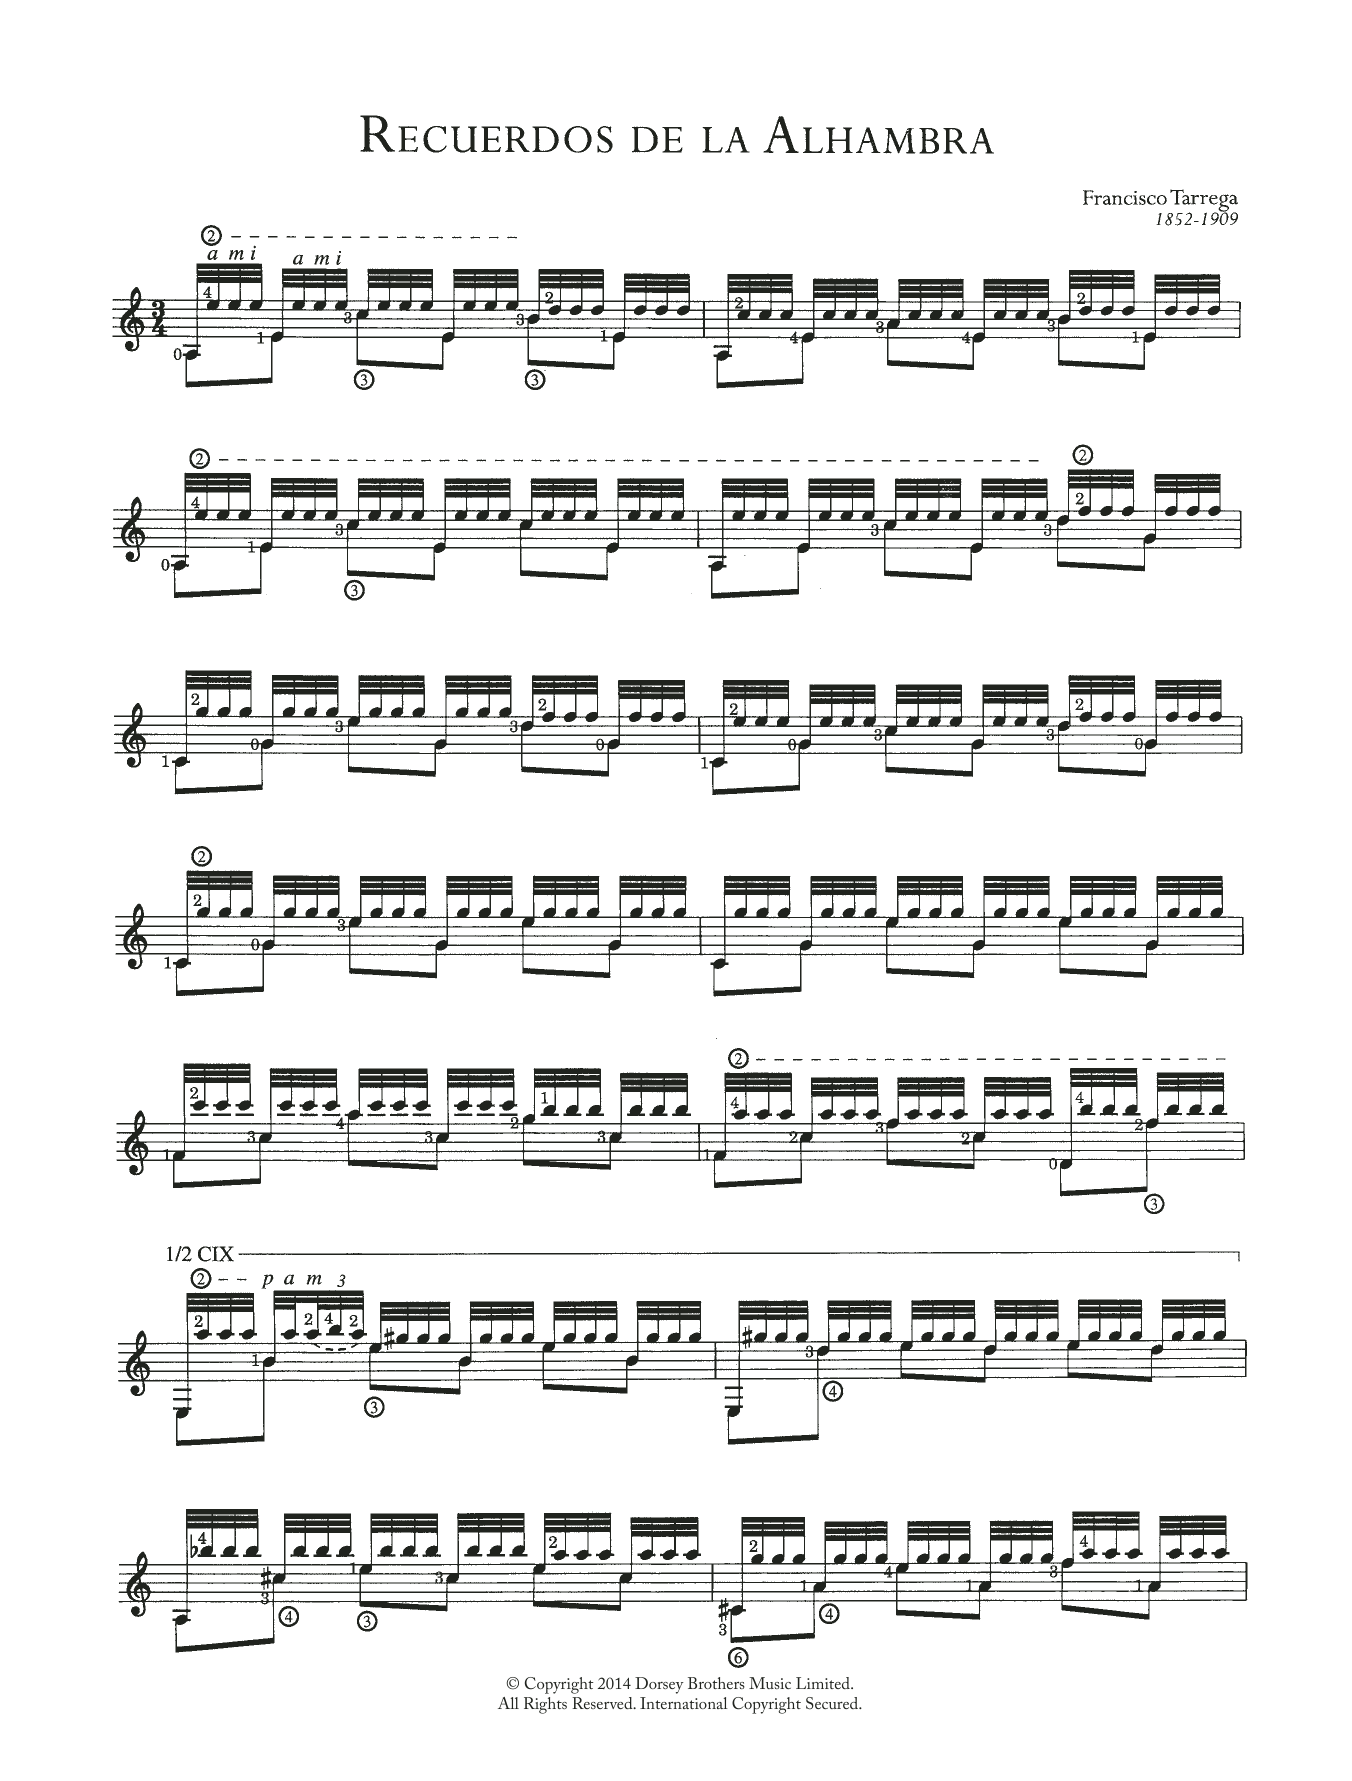 Francisco Tárrega Recuerdos de la Alhambra Sheet Music Notes & Chords for Brass Solo - Download or Print PDF